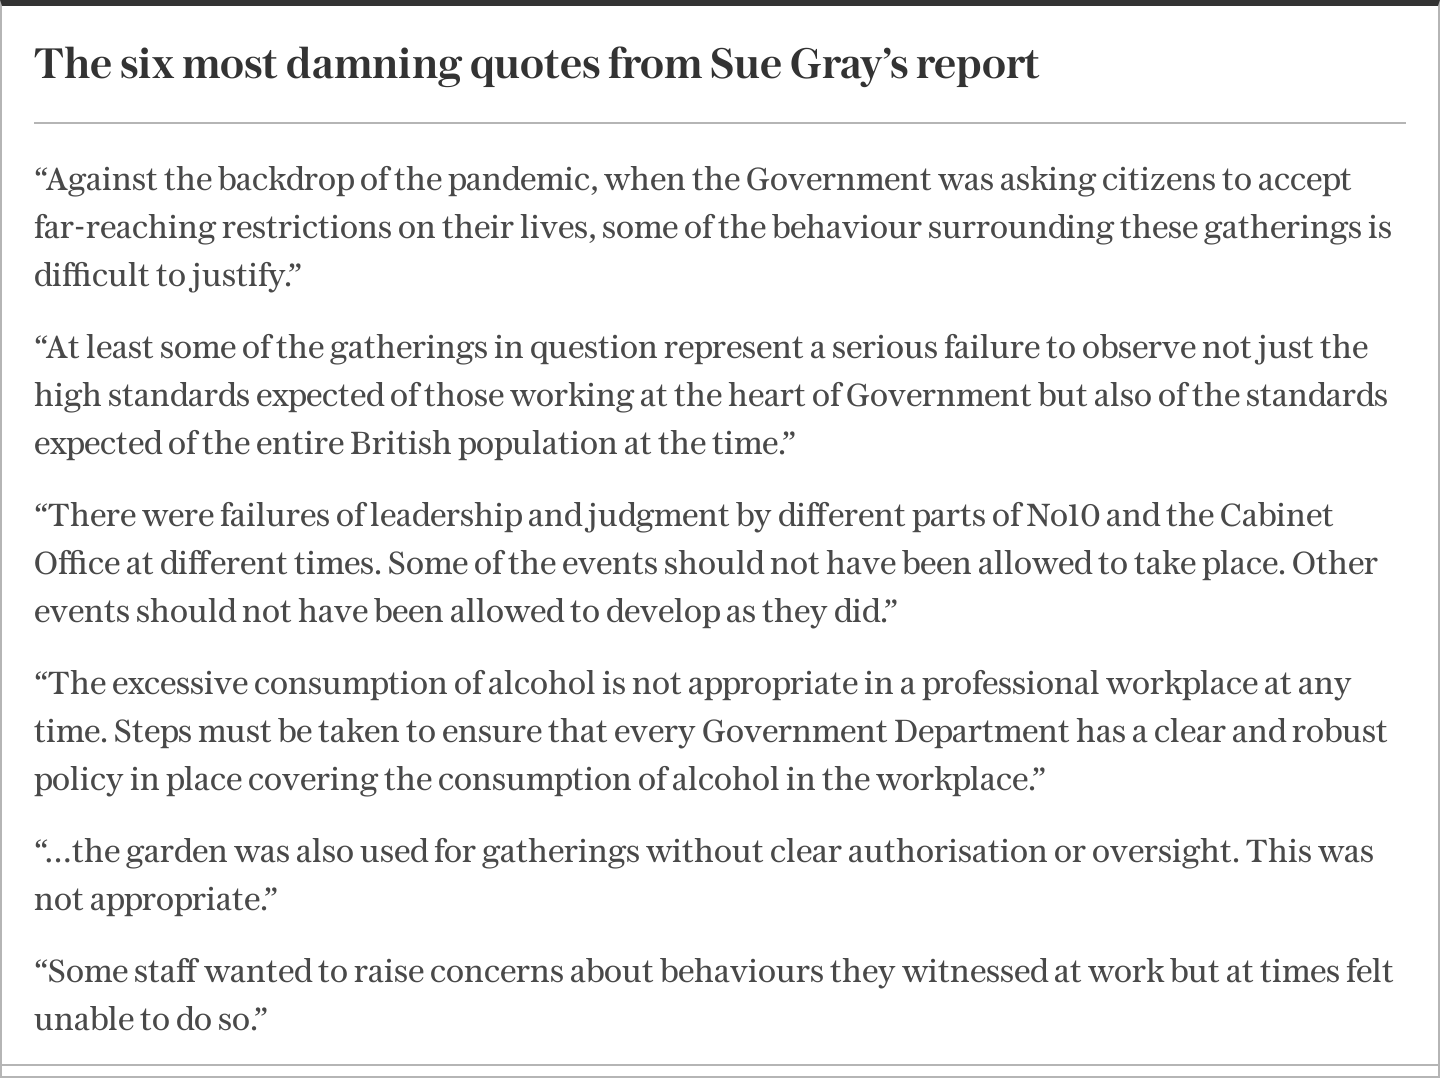 sue gray says investigating no 10 behaviour during lockdown was ‘heartbreaking’